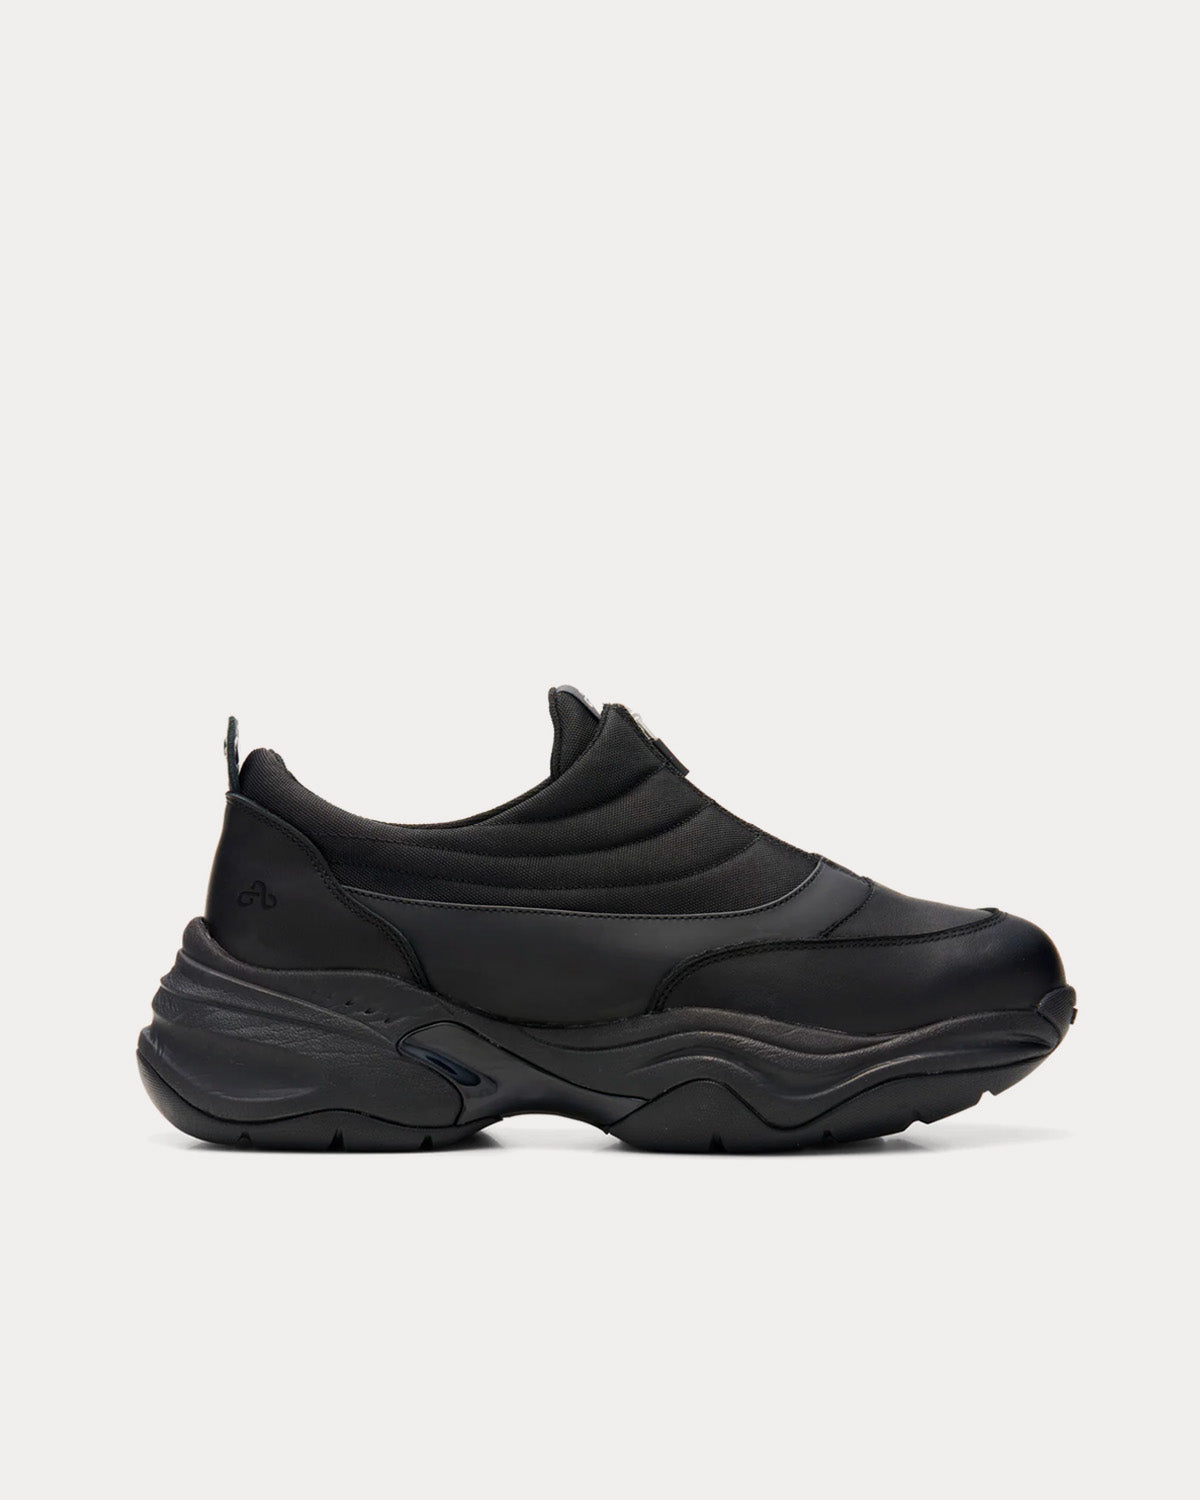 OAO - Fountain Black Low Top Sneakers